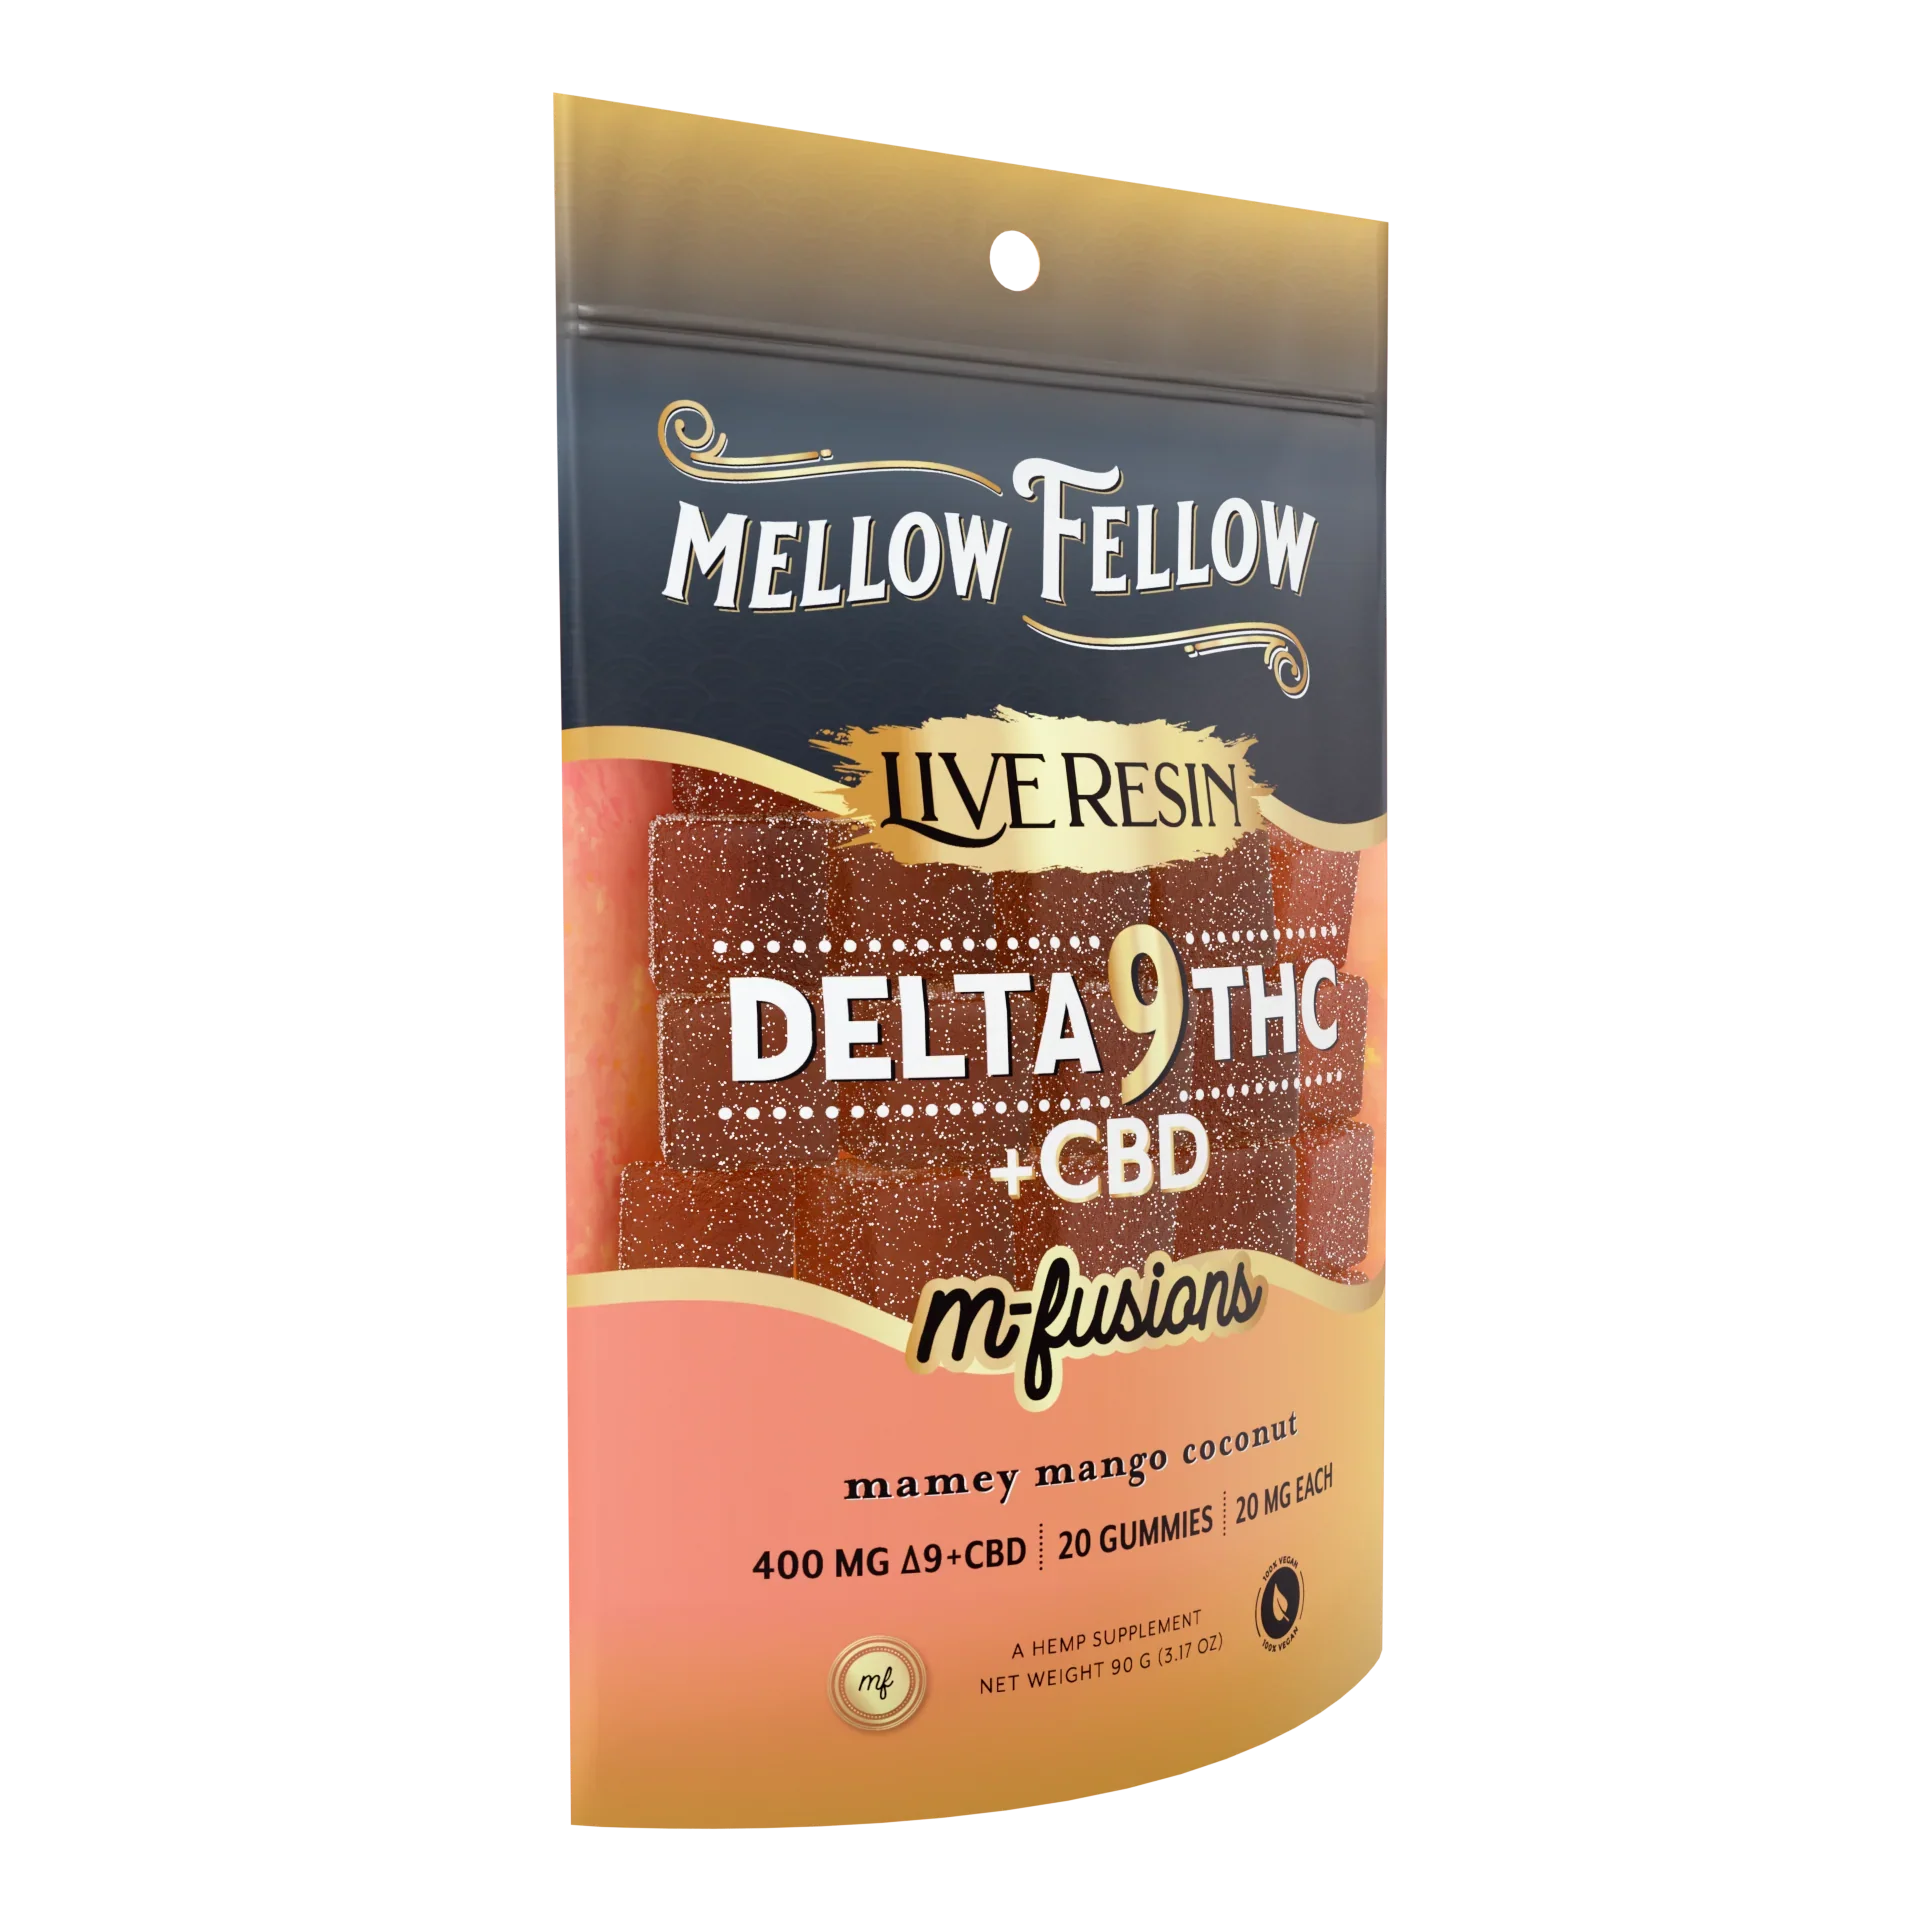 Mellow Fellow Delta 9 Live Resin Edibles 400mg - Mamey Mango Coconut Best Price